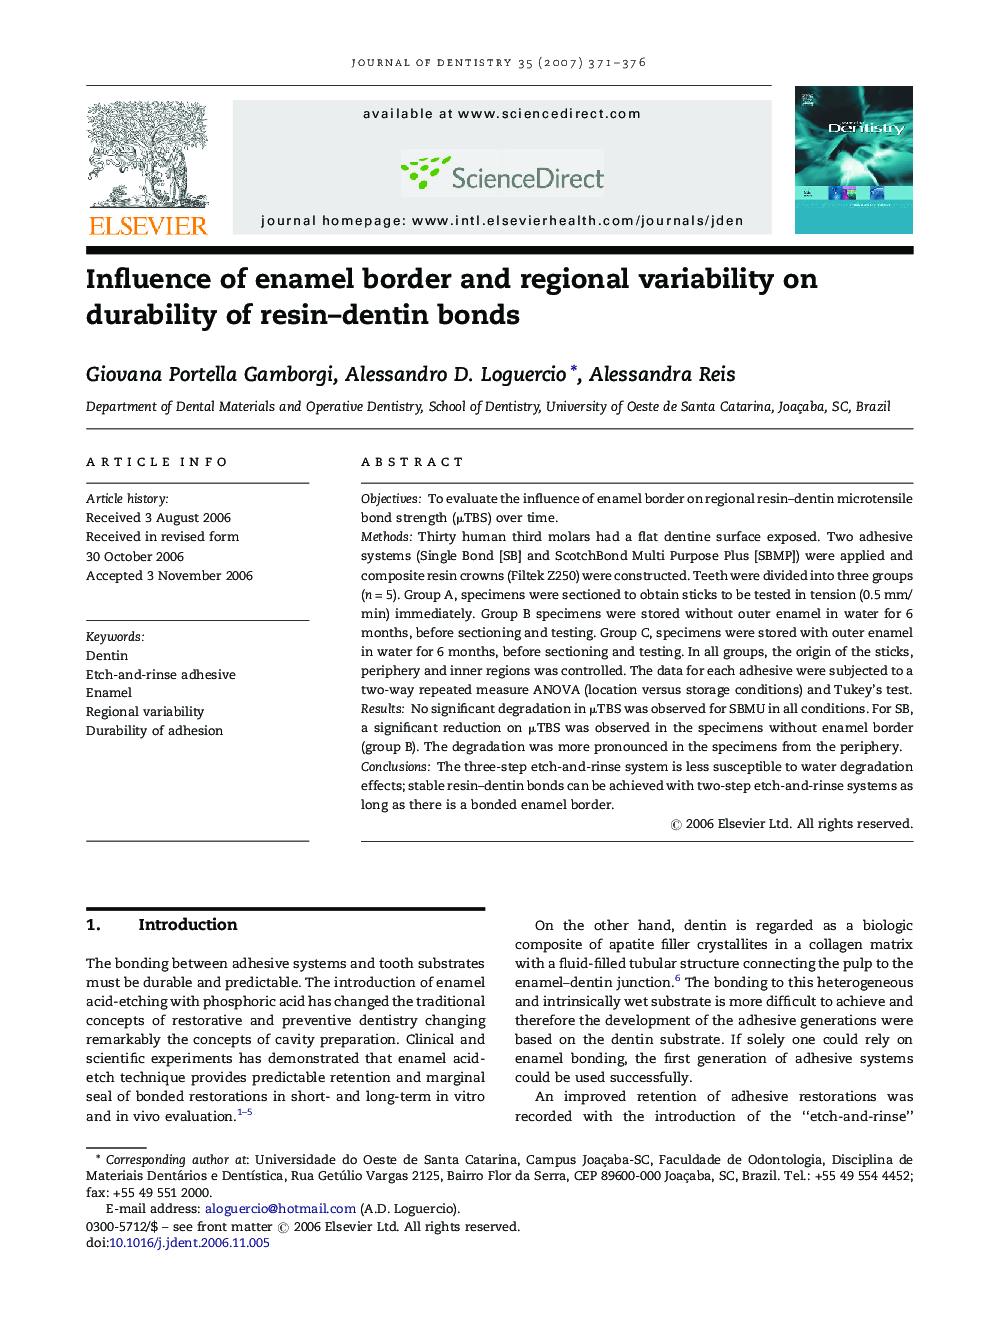 Influence of enamel border and regional variability on durability of resin–dentin bonds